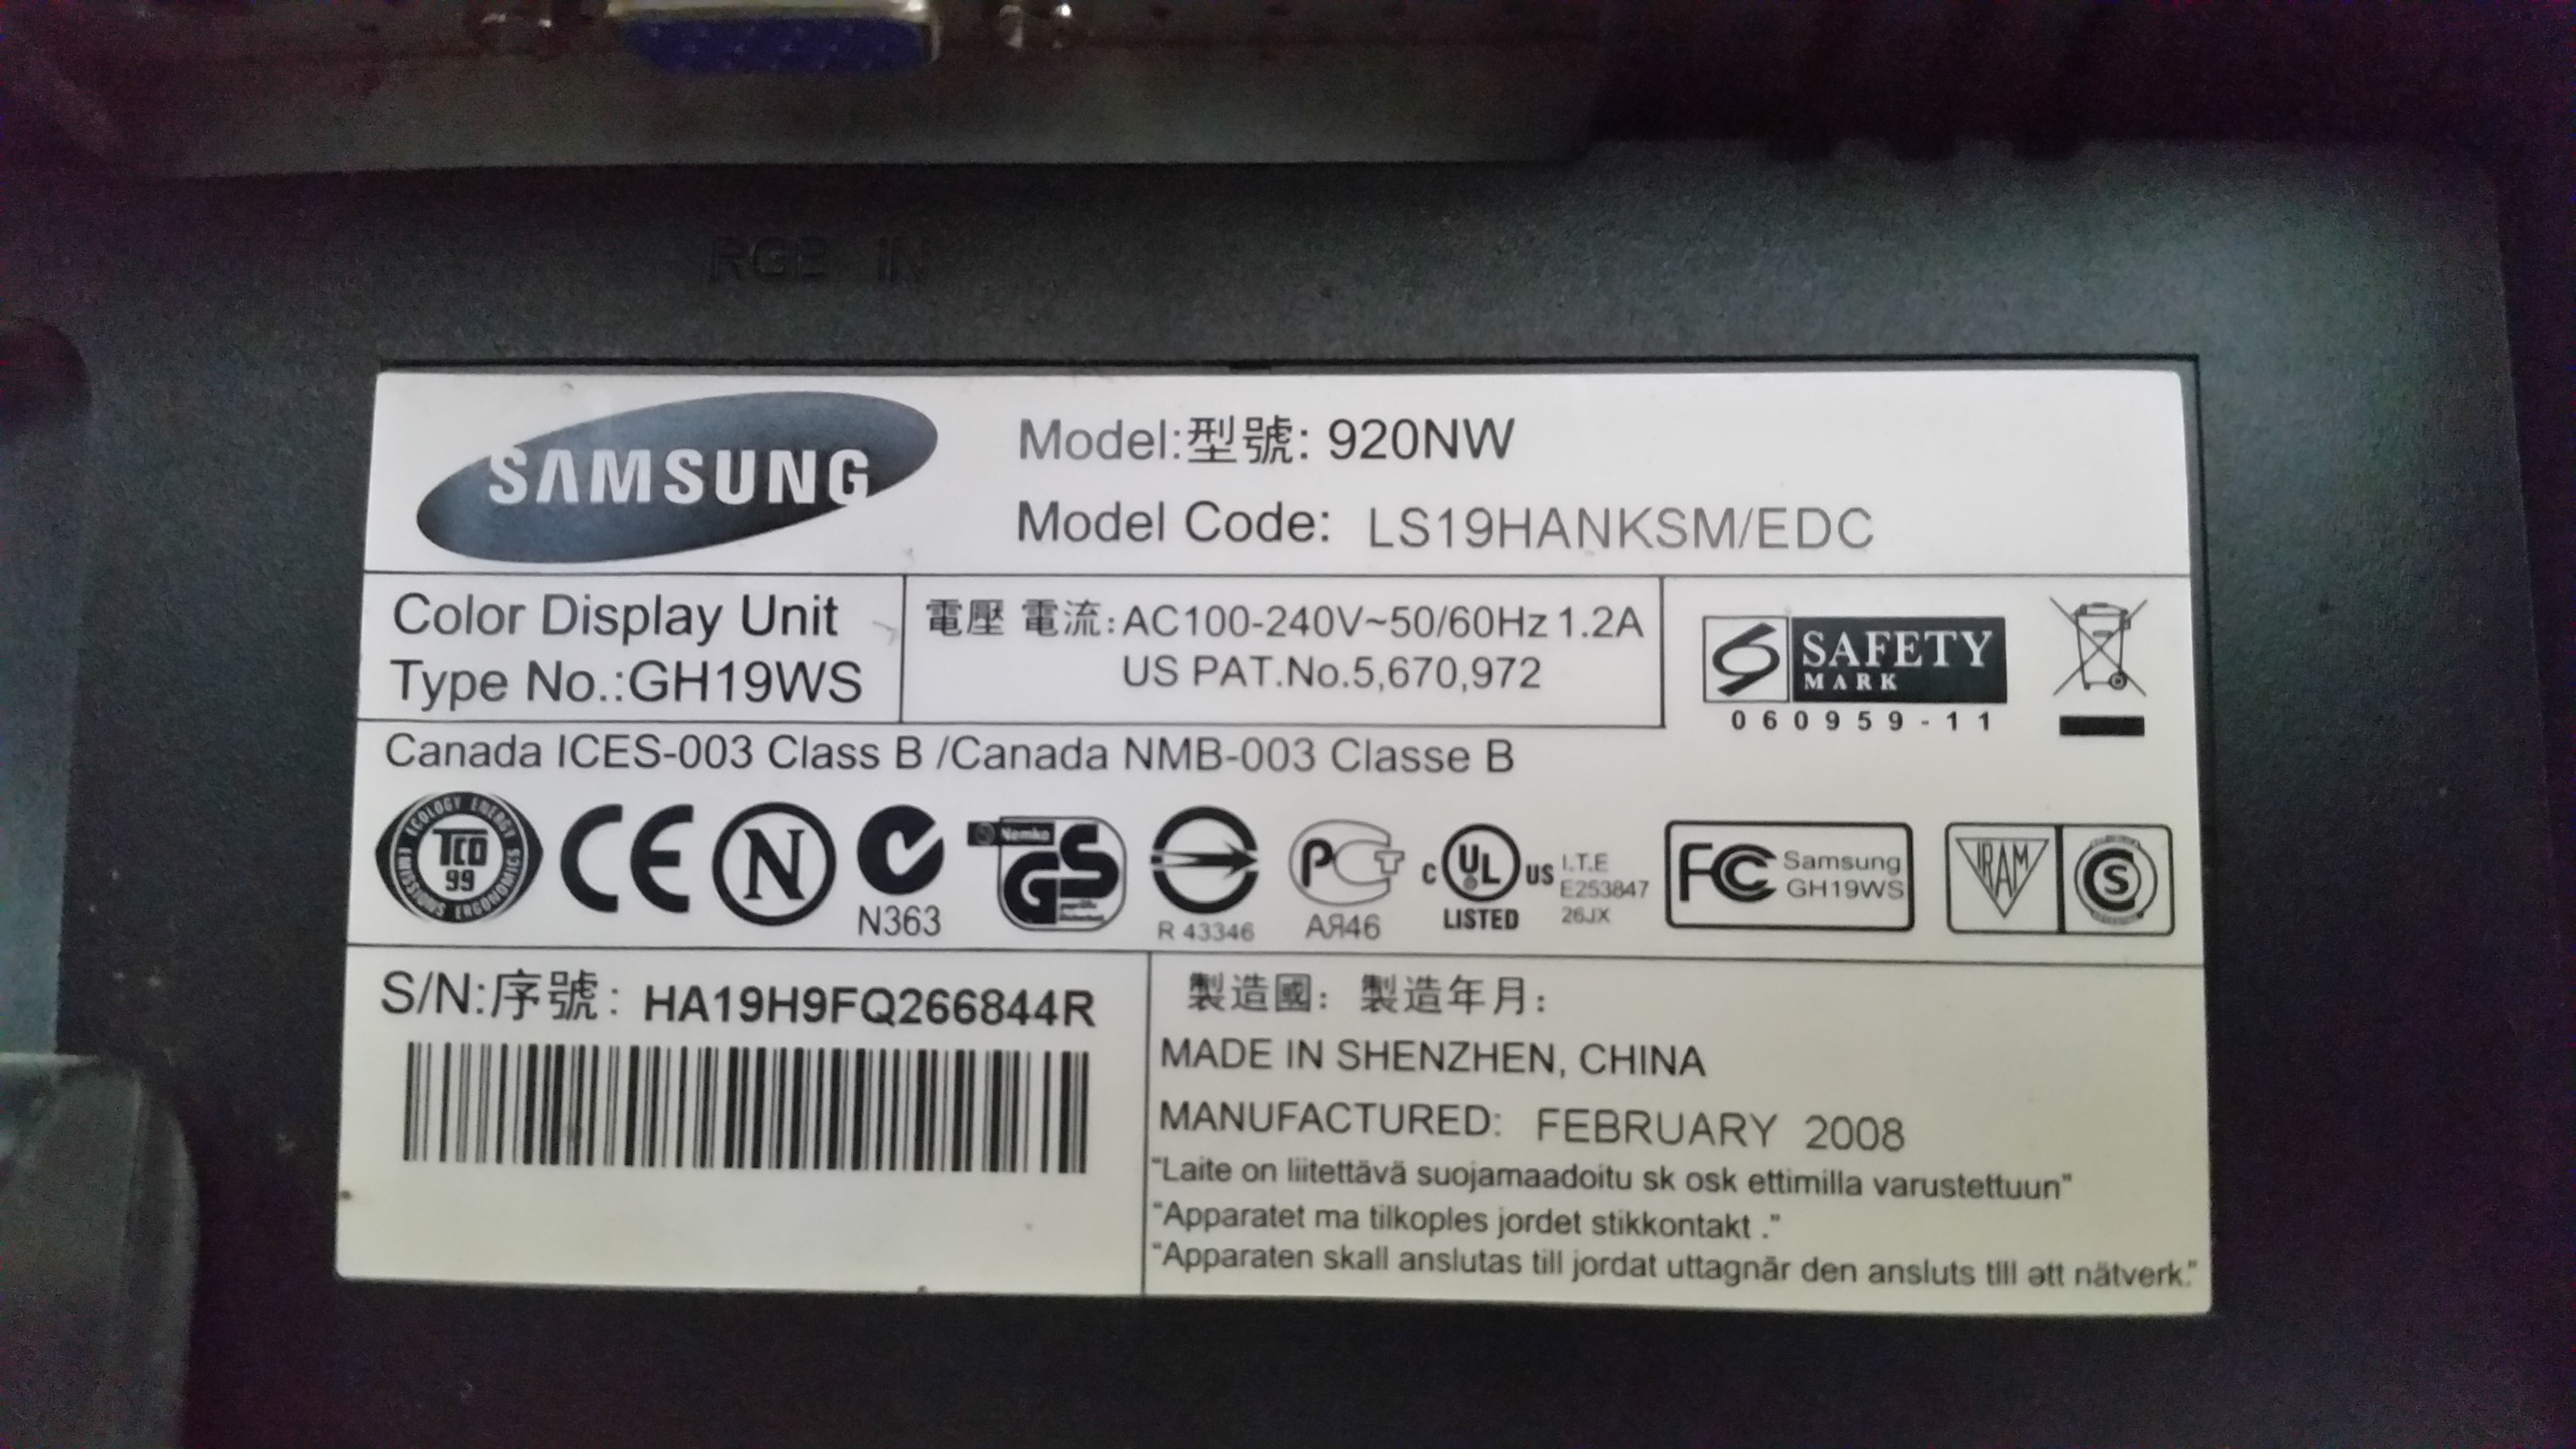  Samsung 920NW, LS19HANKSMEDC,  